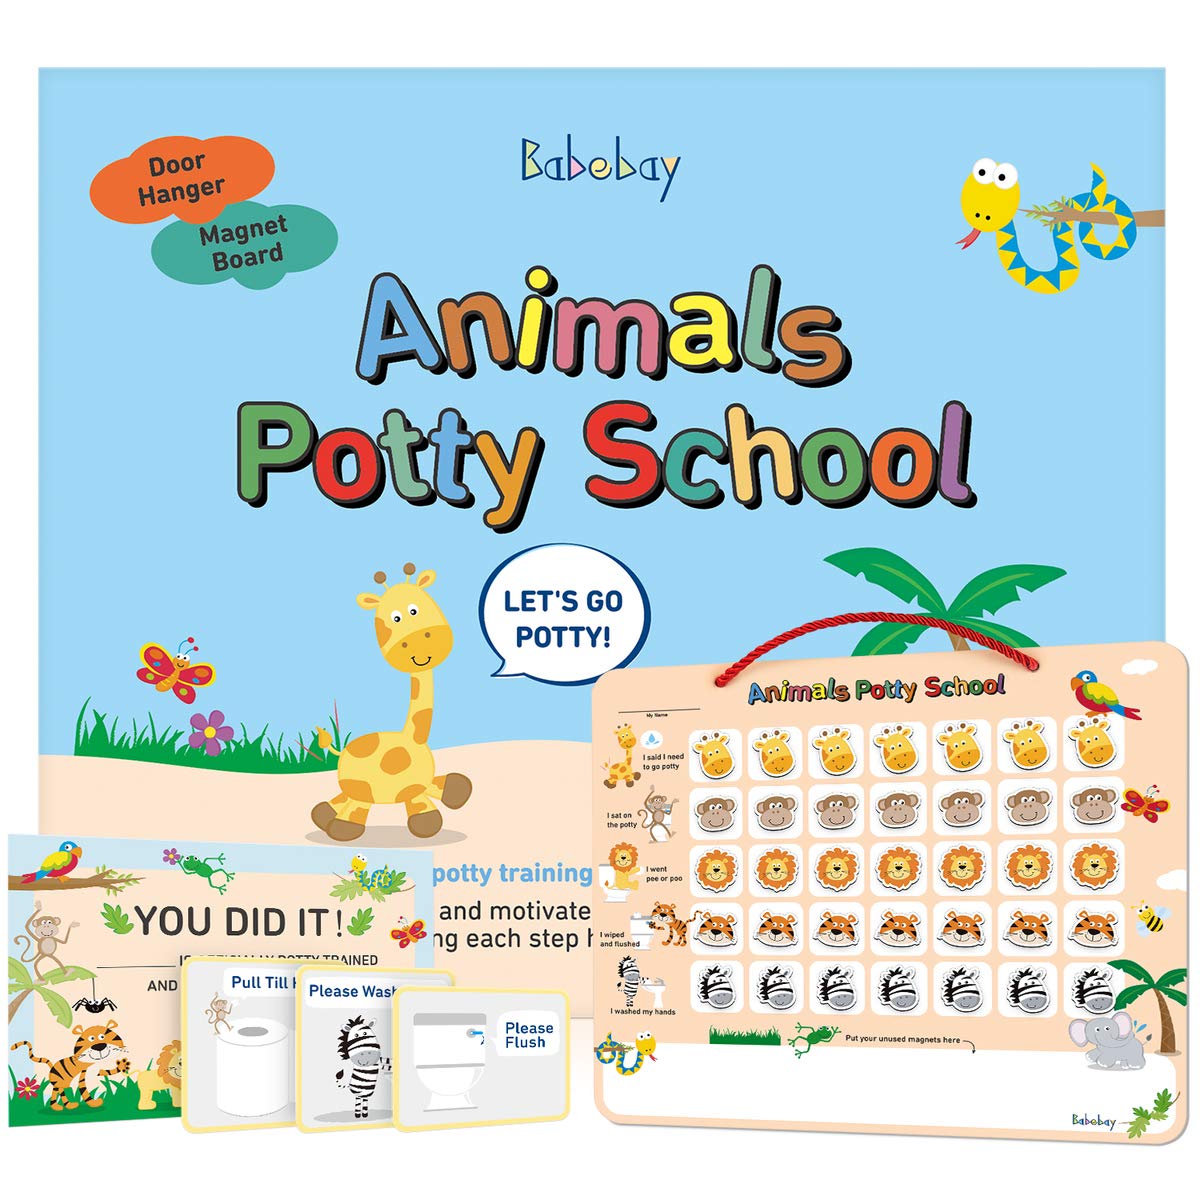 Babebay Potty Training Chart for Toddlers - Fun Animal Design